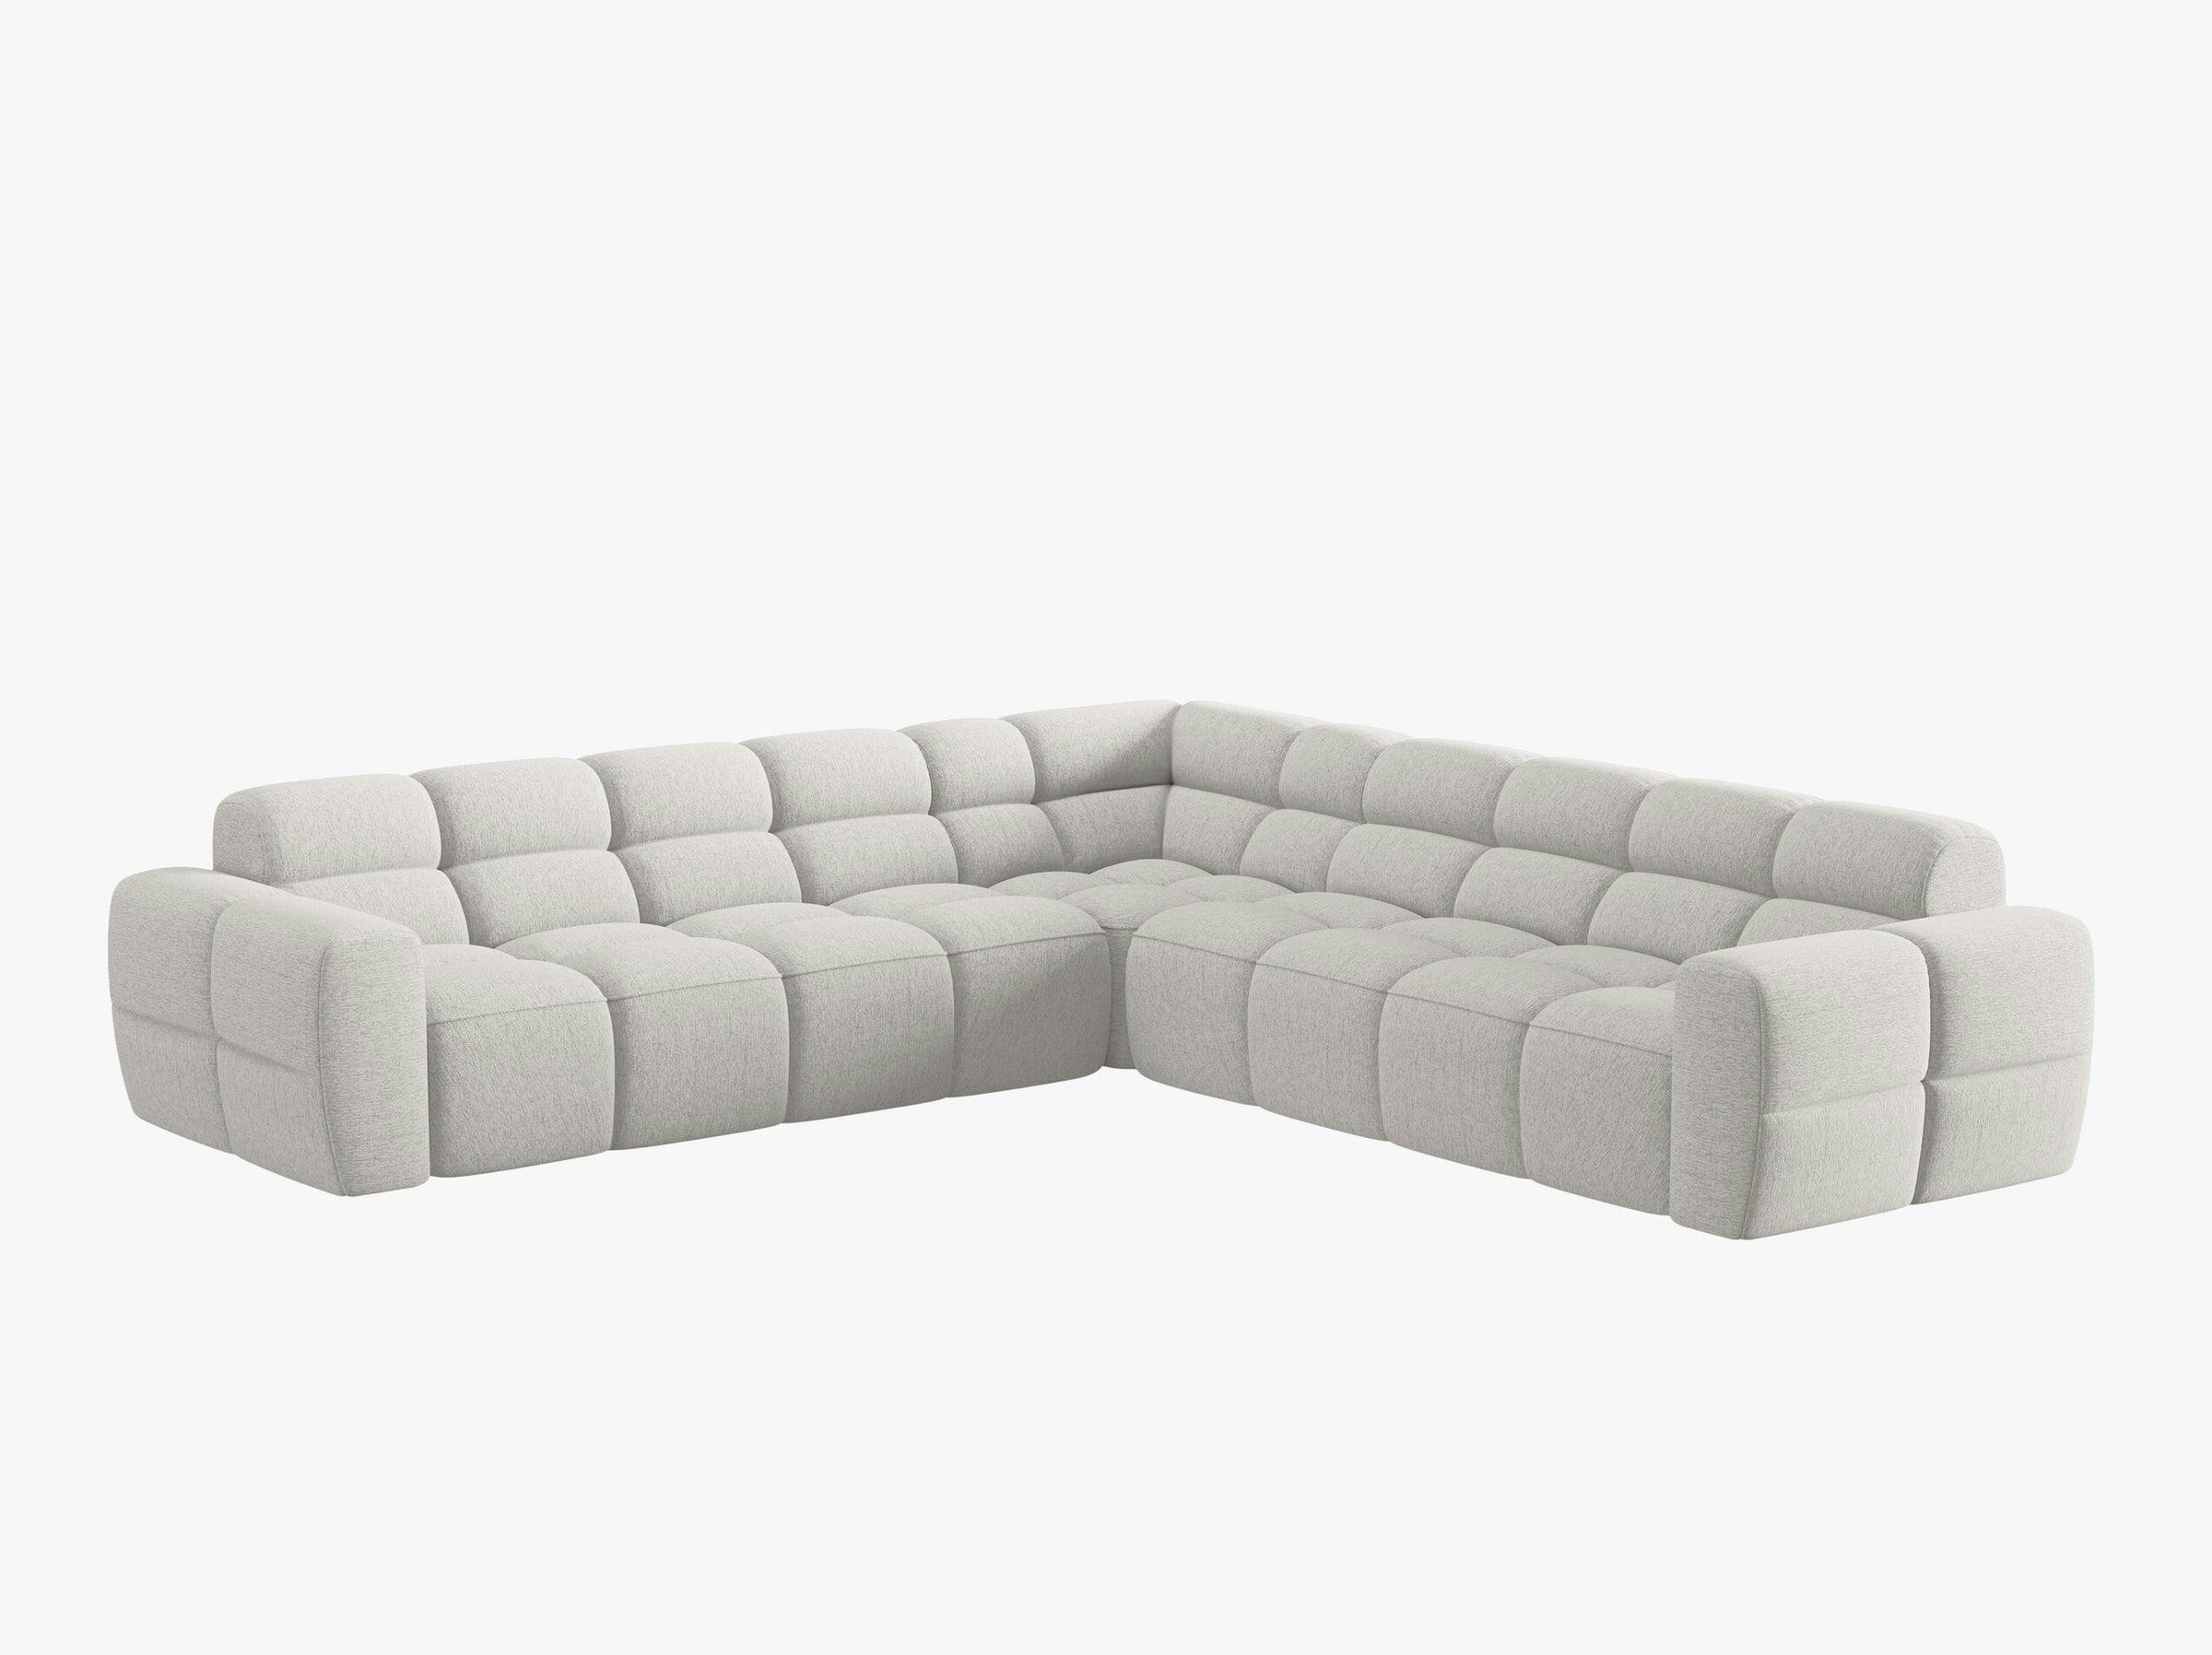 Lisa sofas strukturierter stoff hellgrau